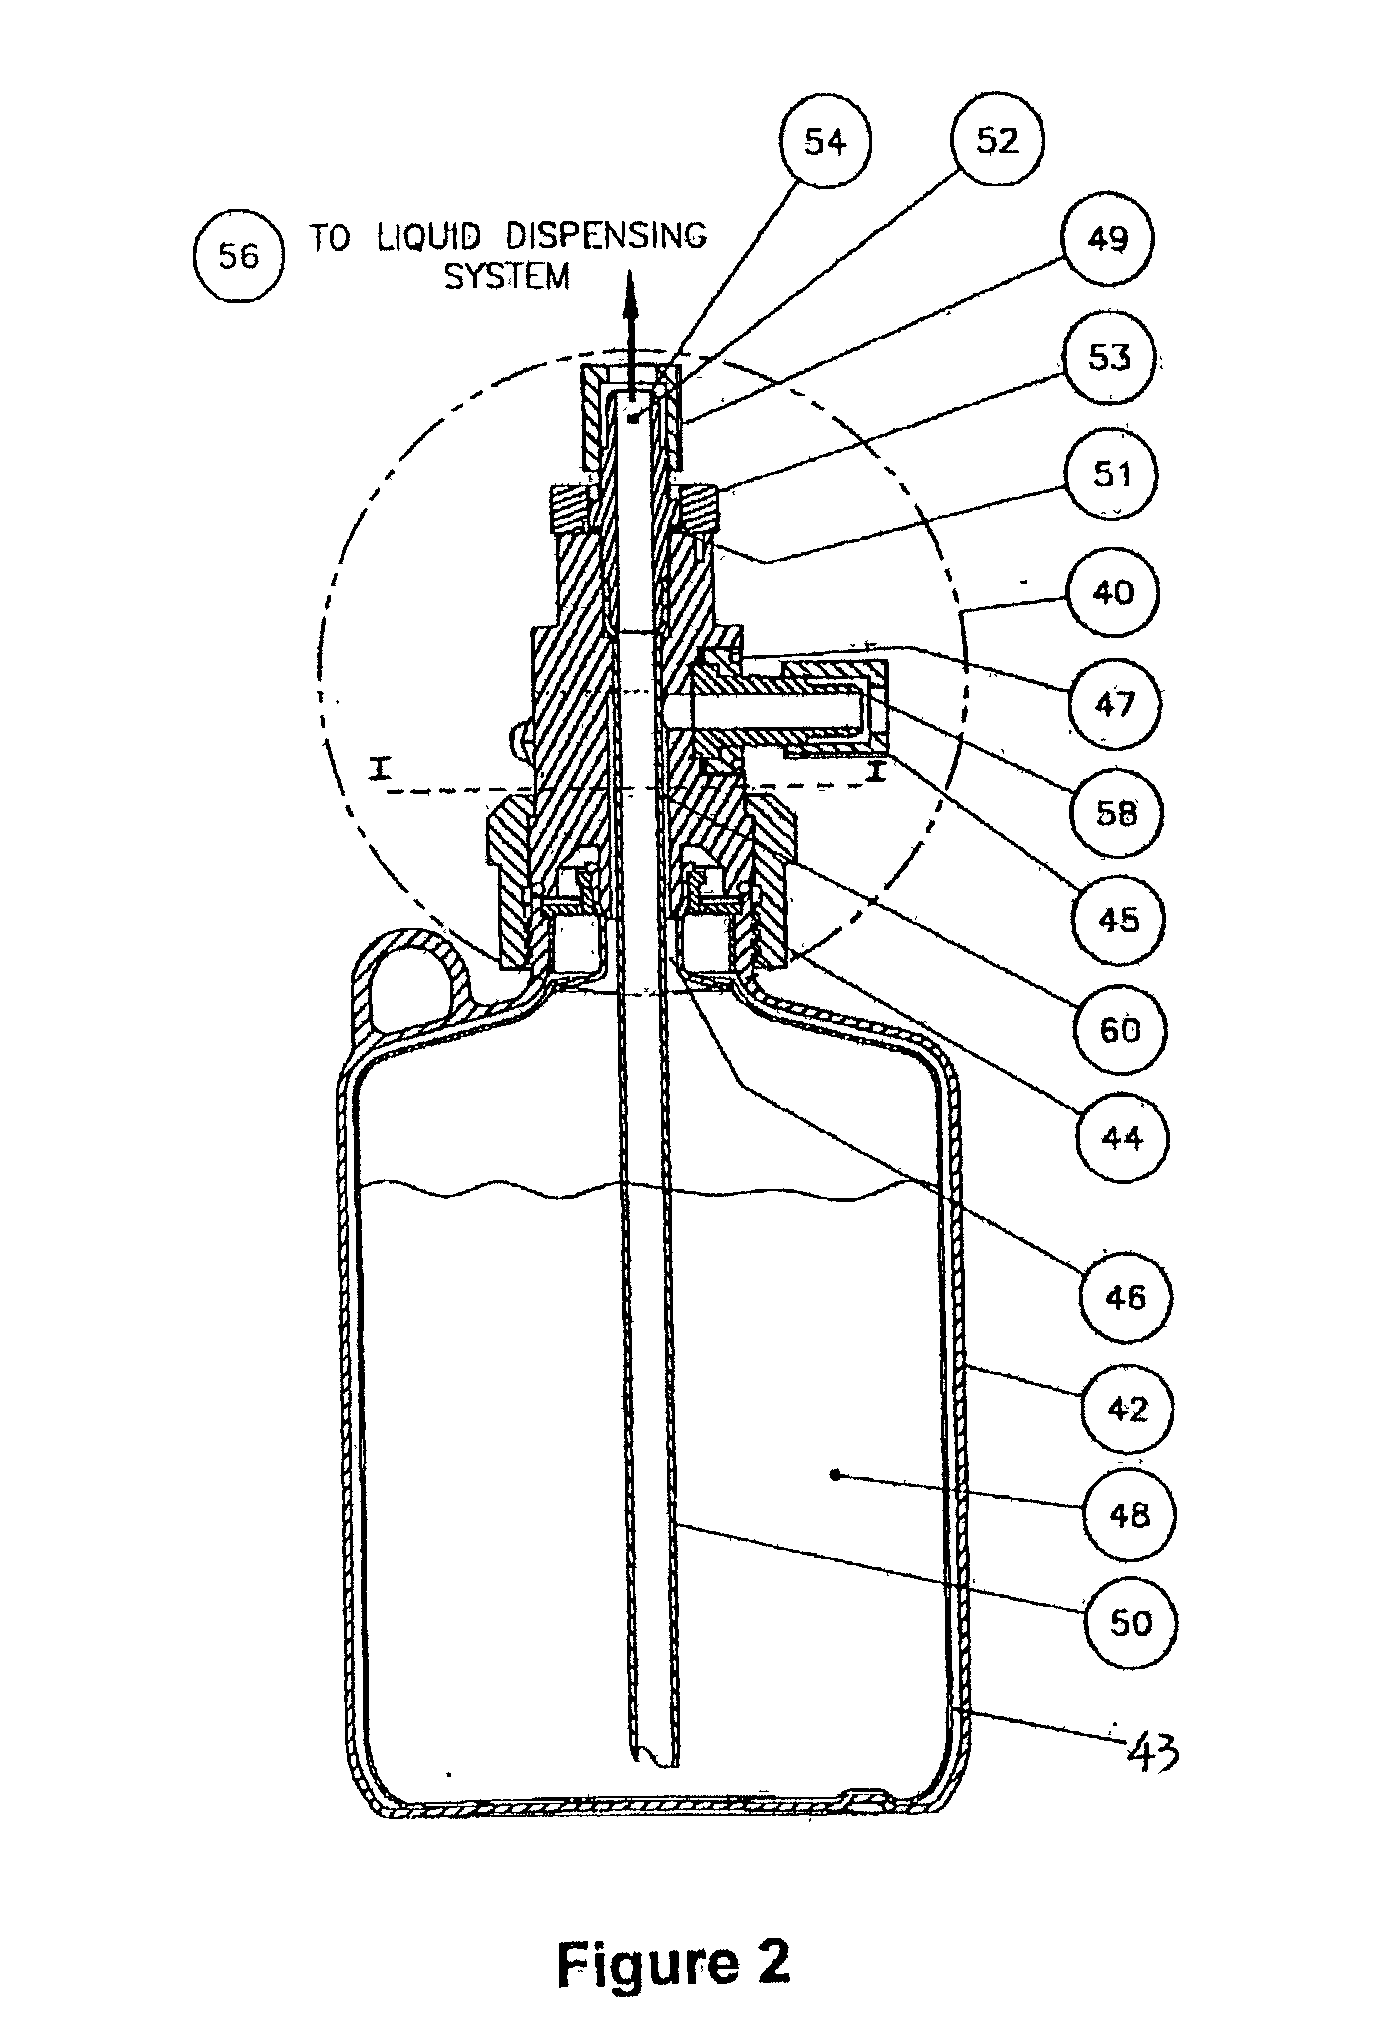 Apparatus and method for dispensing high-viscosity liquid